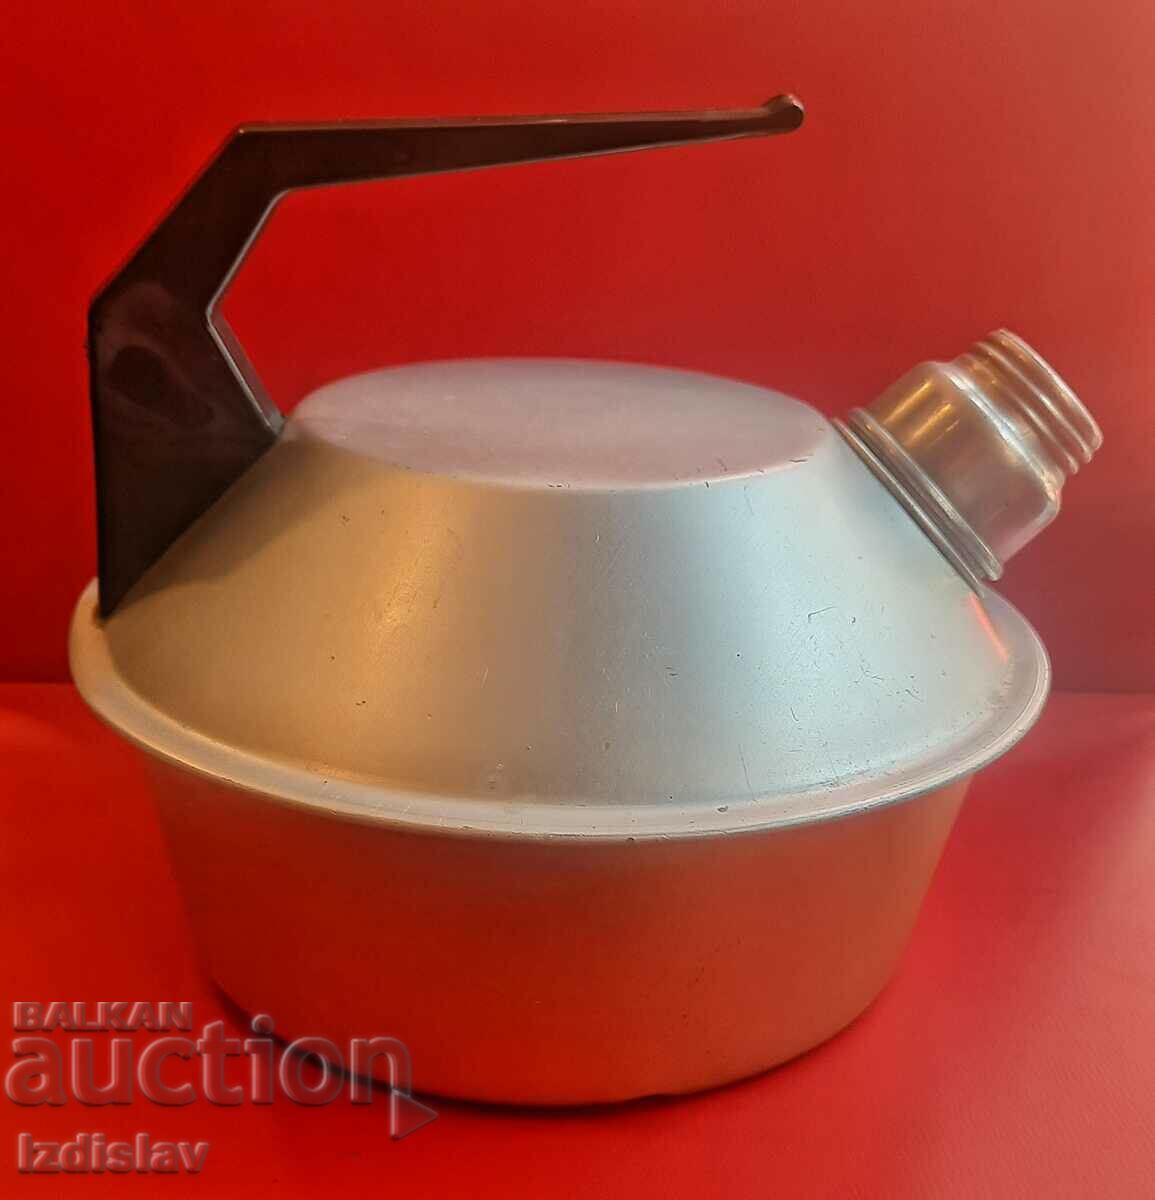 Unused teapot from Sots vremya, stylish design